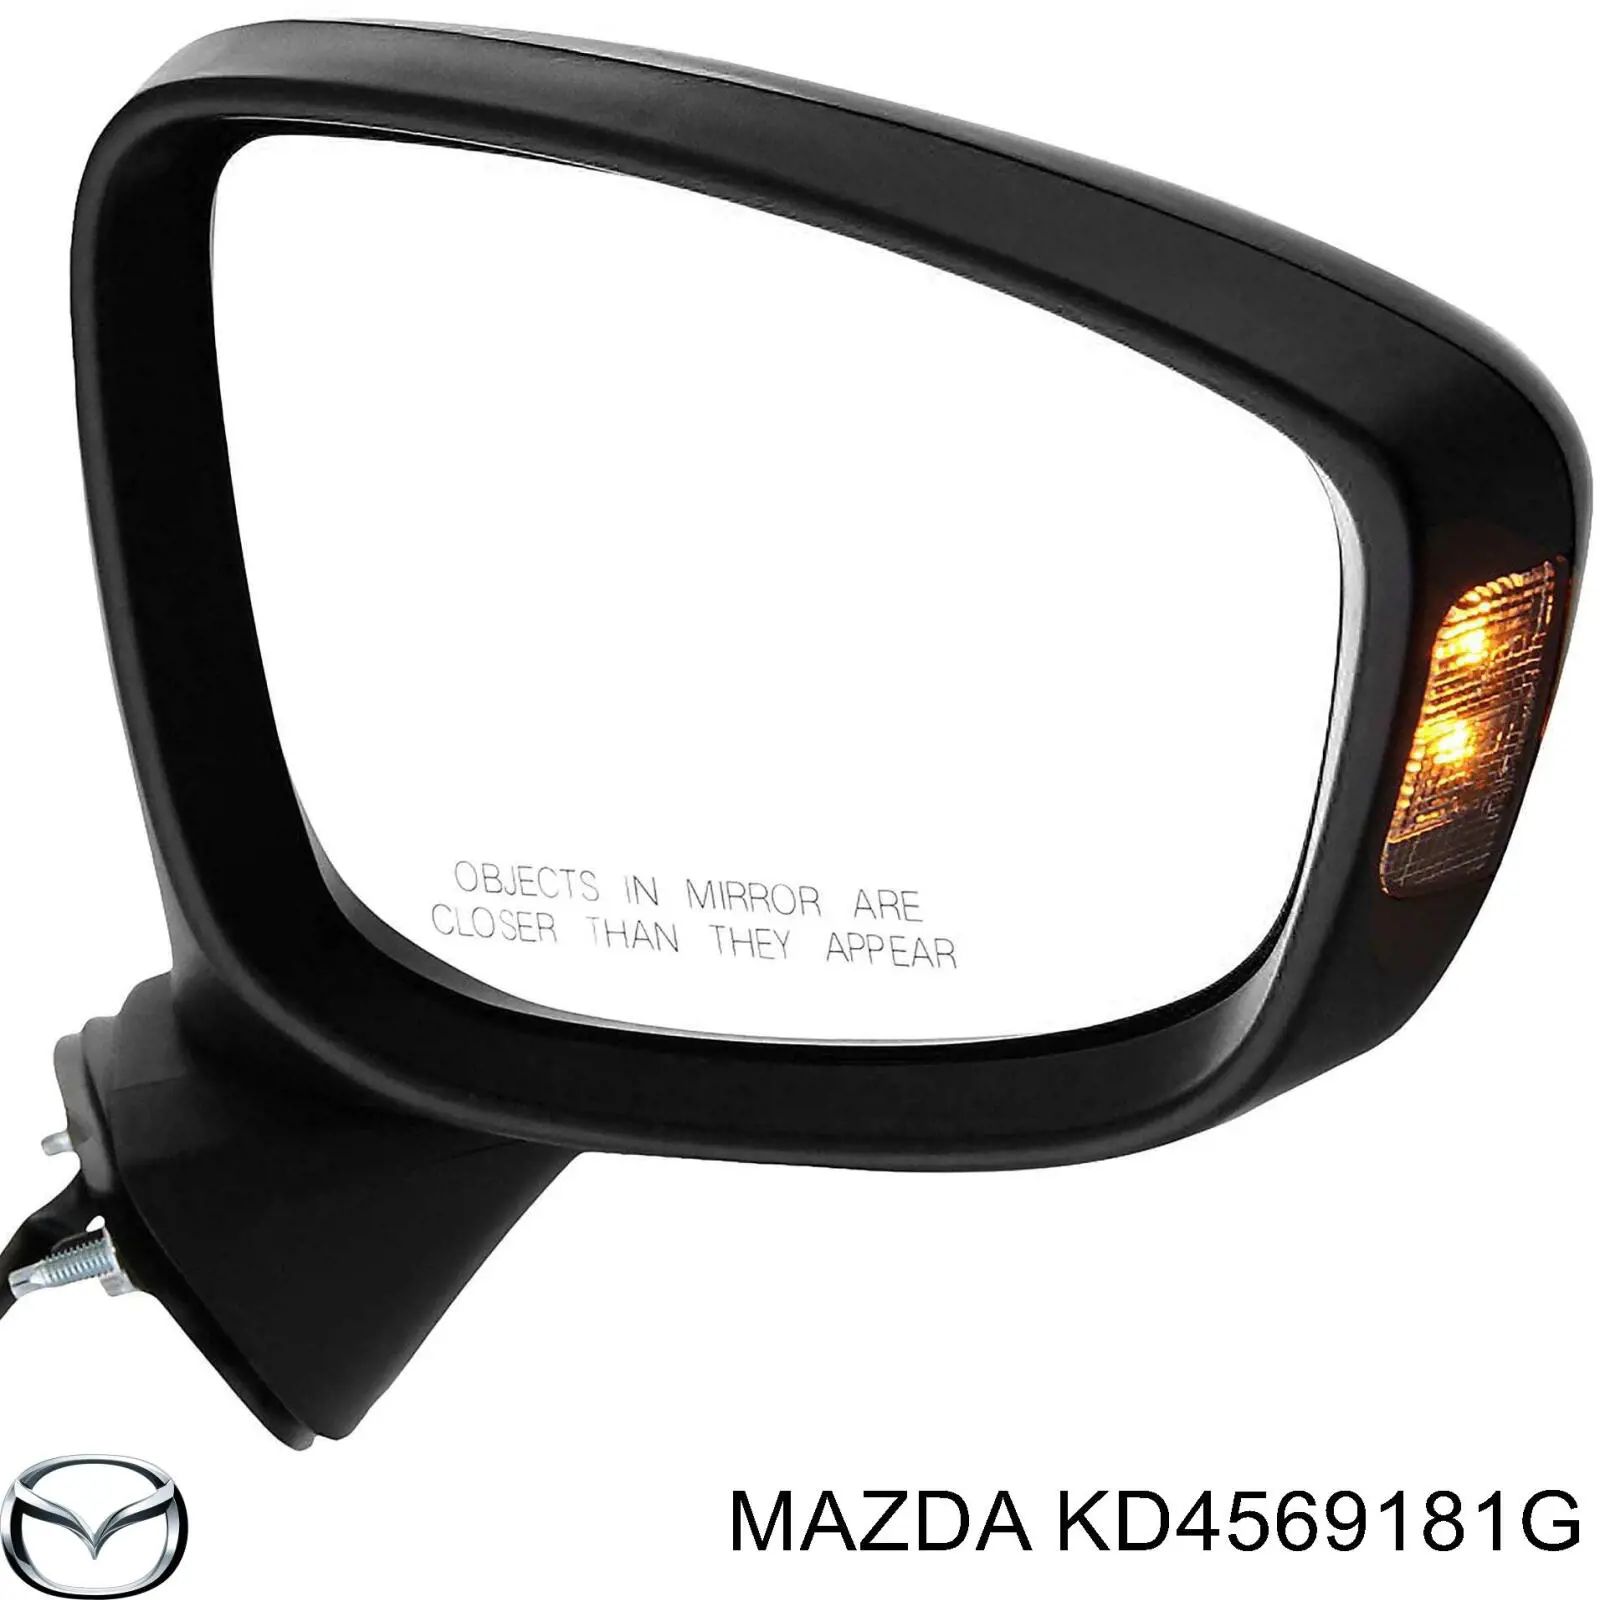 KD4569181F Mazda espejo retrovisor izquierdo